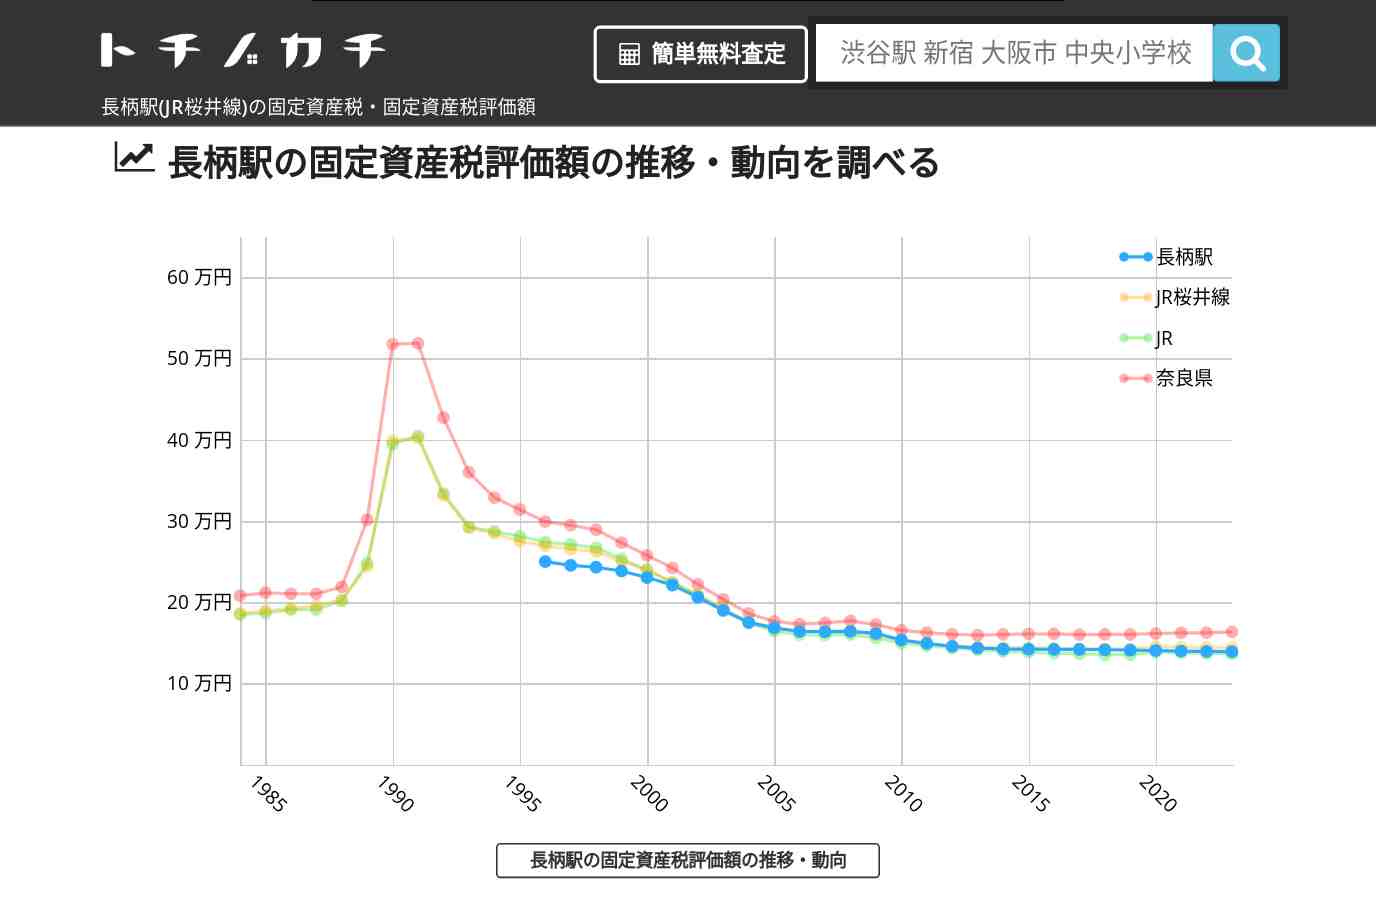 長柄駅(JR桜井線)の固定資産税・固定資産税評価額 | トチノカチ